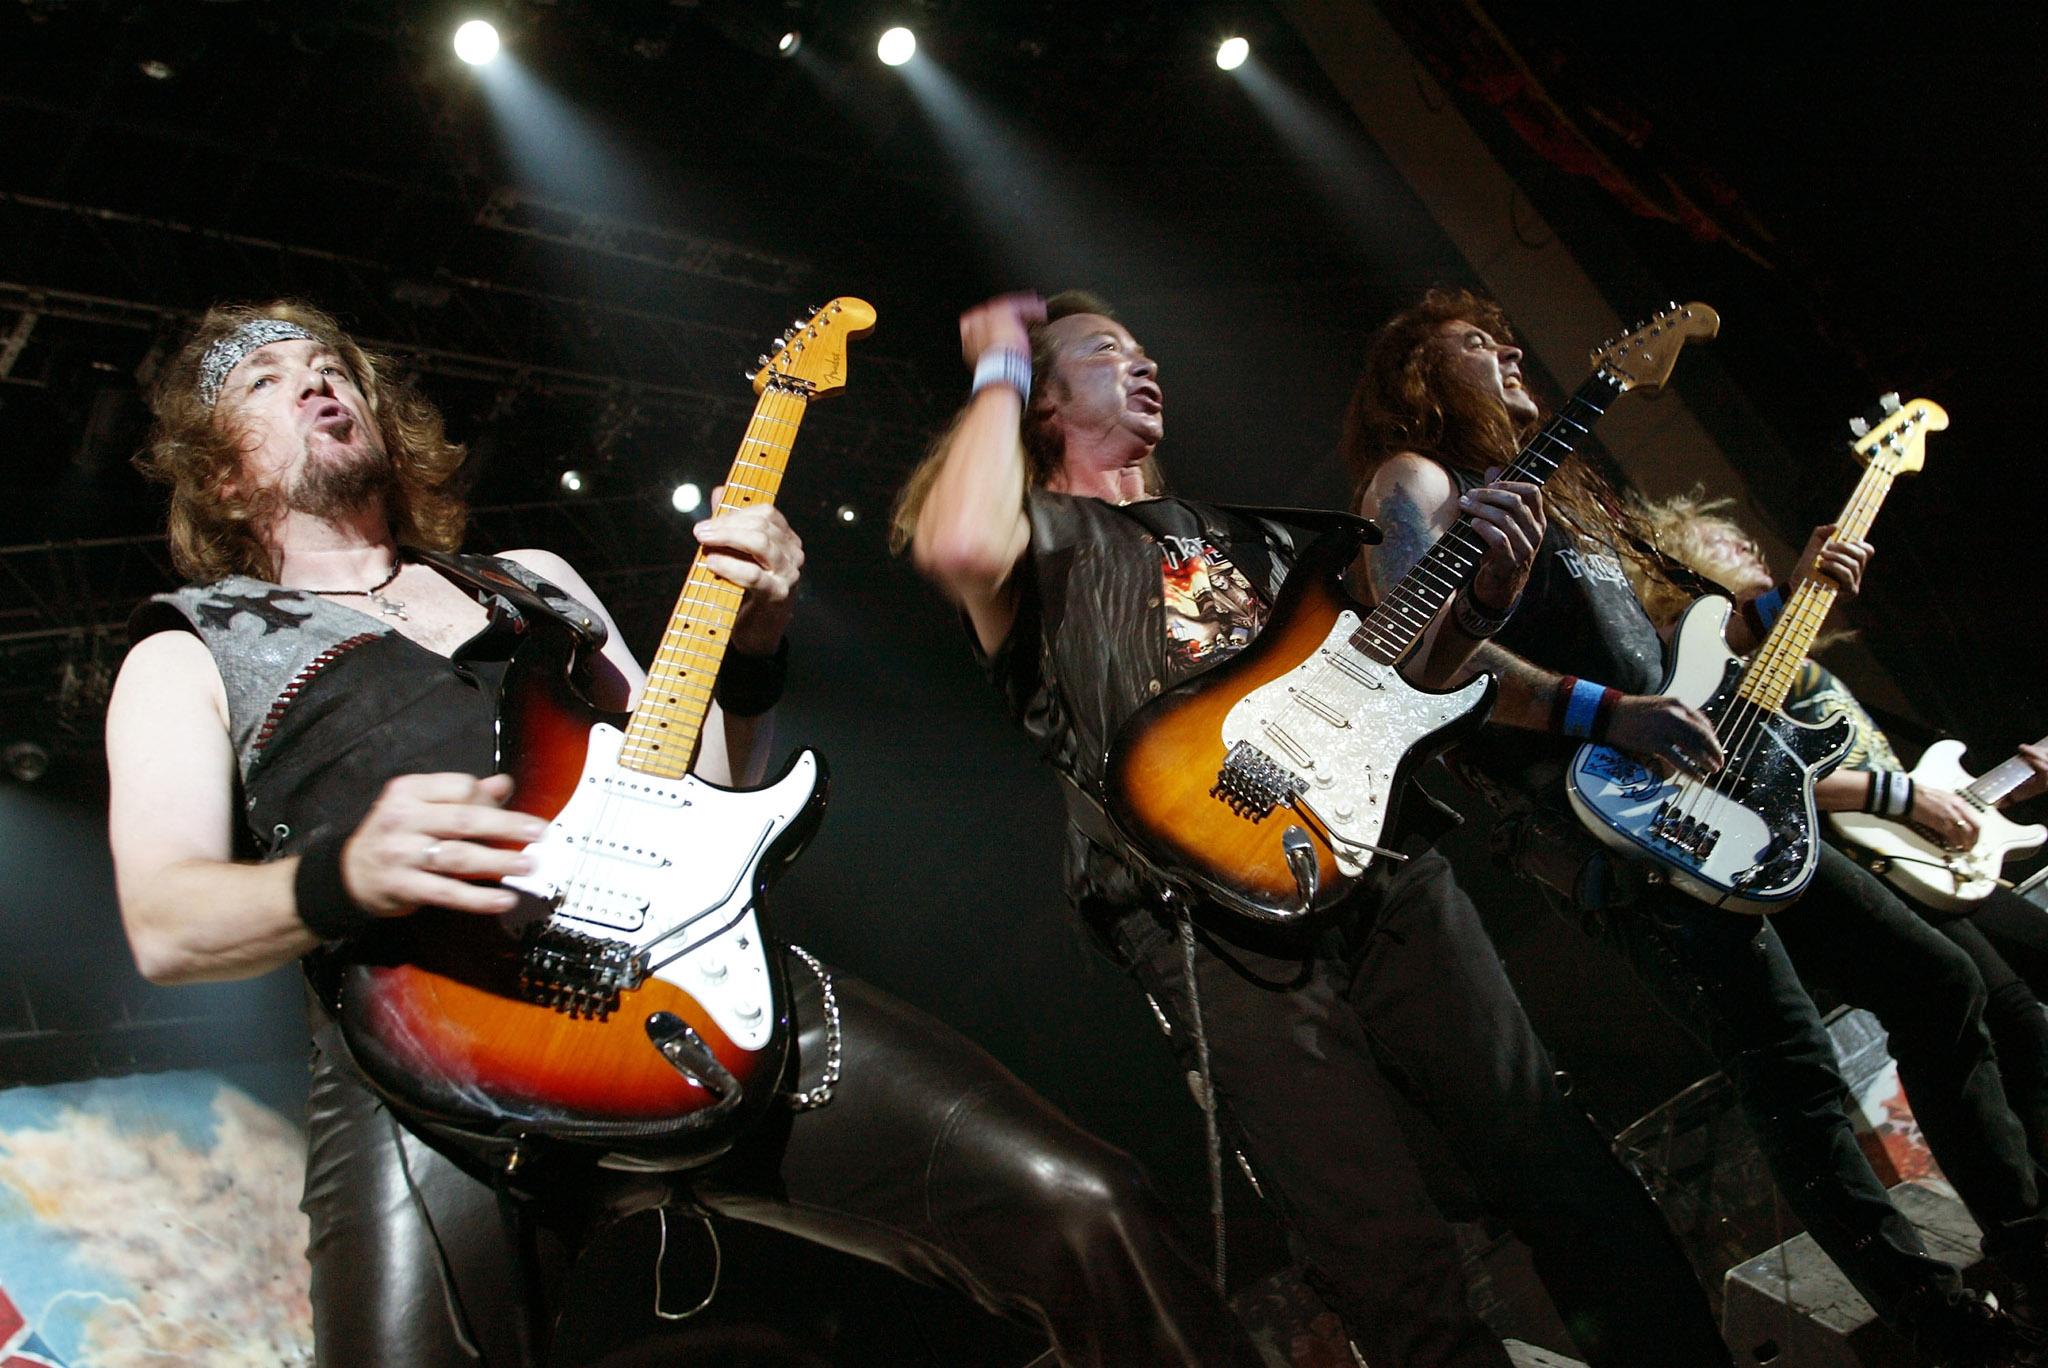 Iron Maiden perform at Ozzfest in 2005